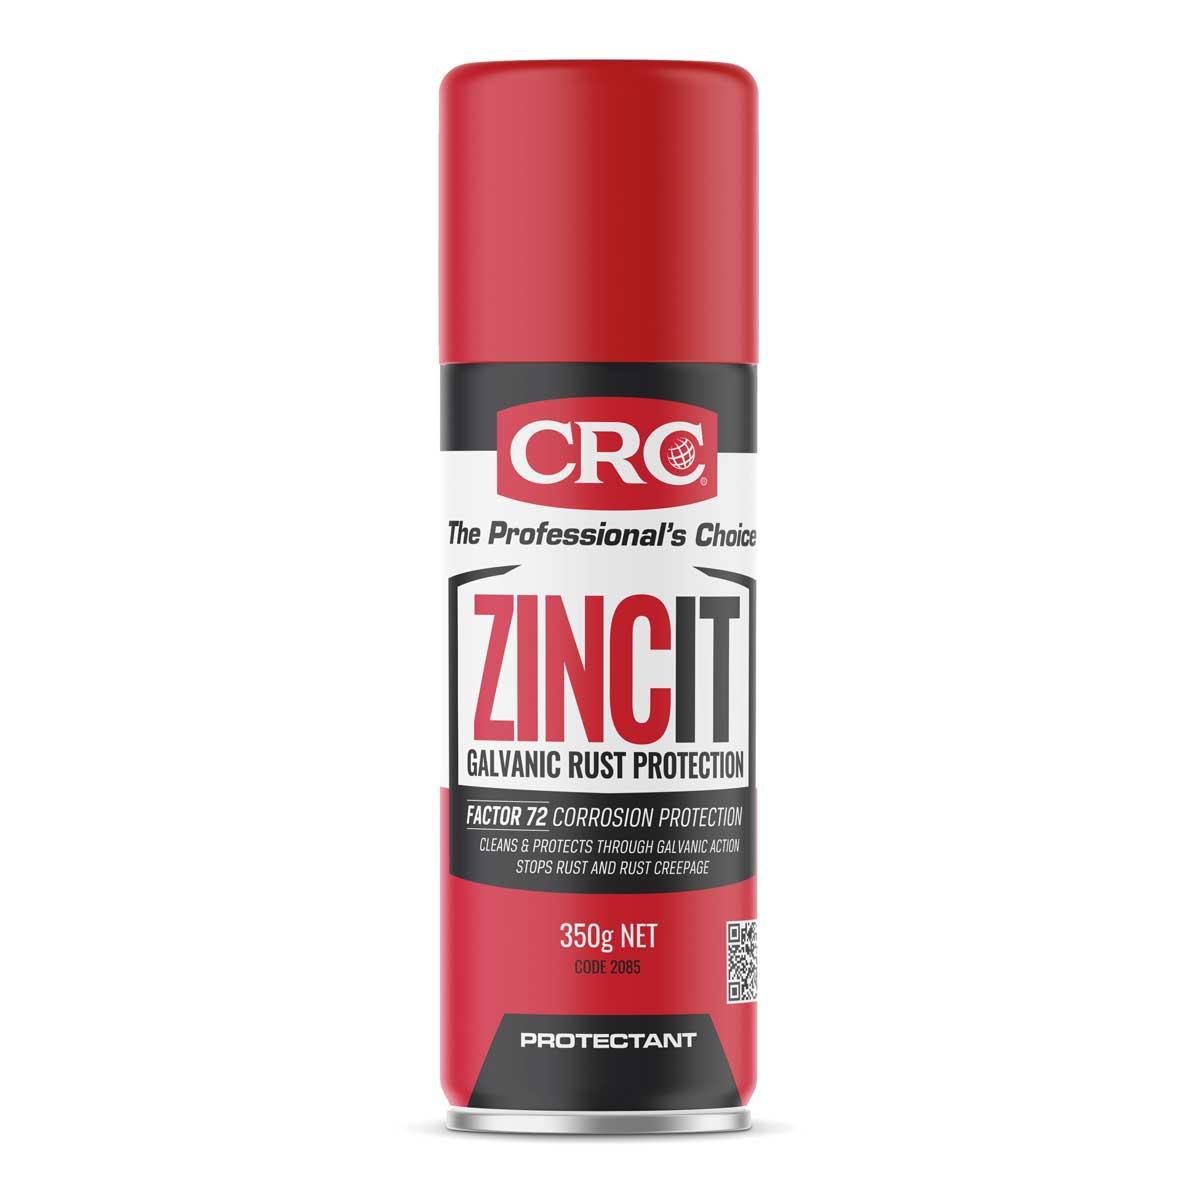 CRC ZINC IT GALVANIC RUST PROTECT 350g